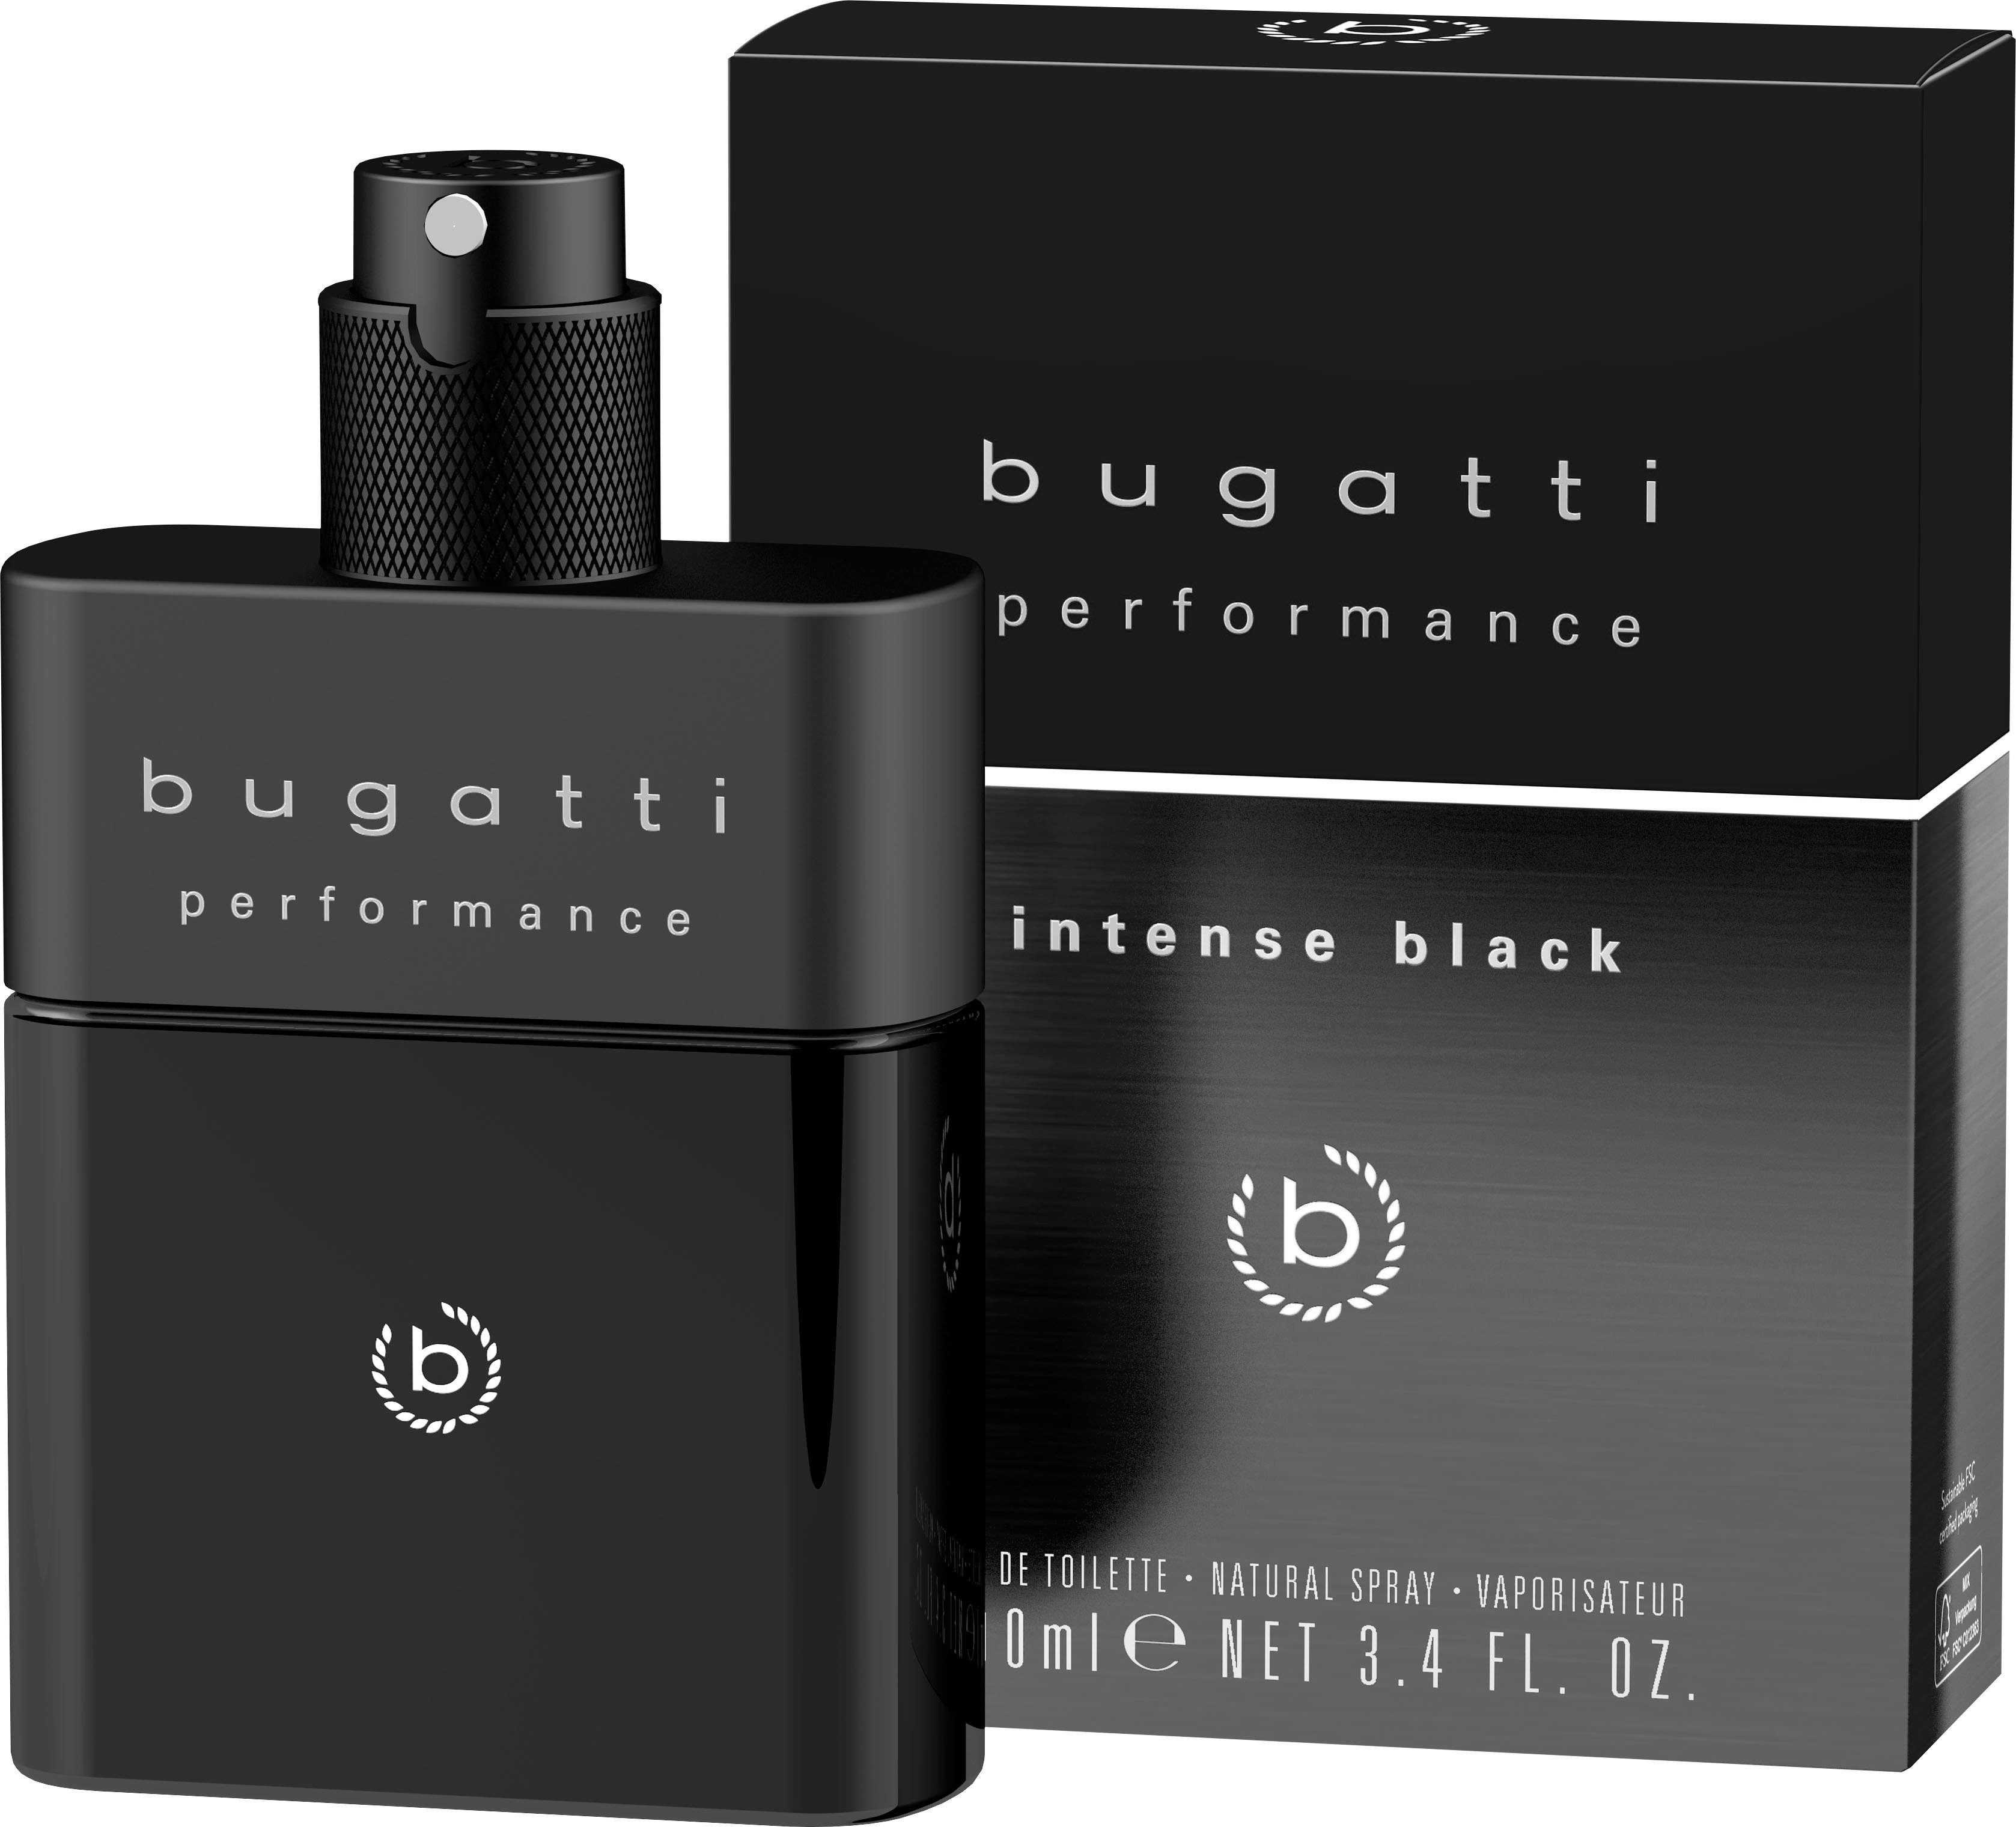 Toilette Eau BUGATTI 100ml Black Performance bugatti Intense de EdT